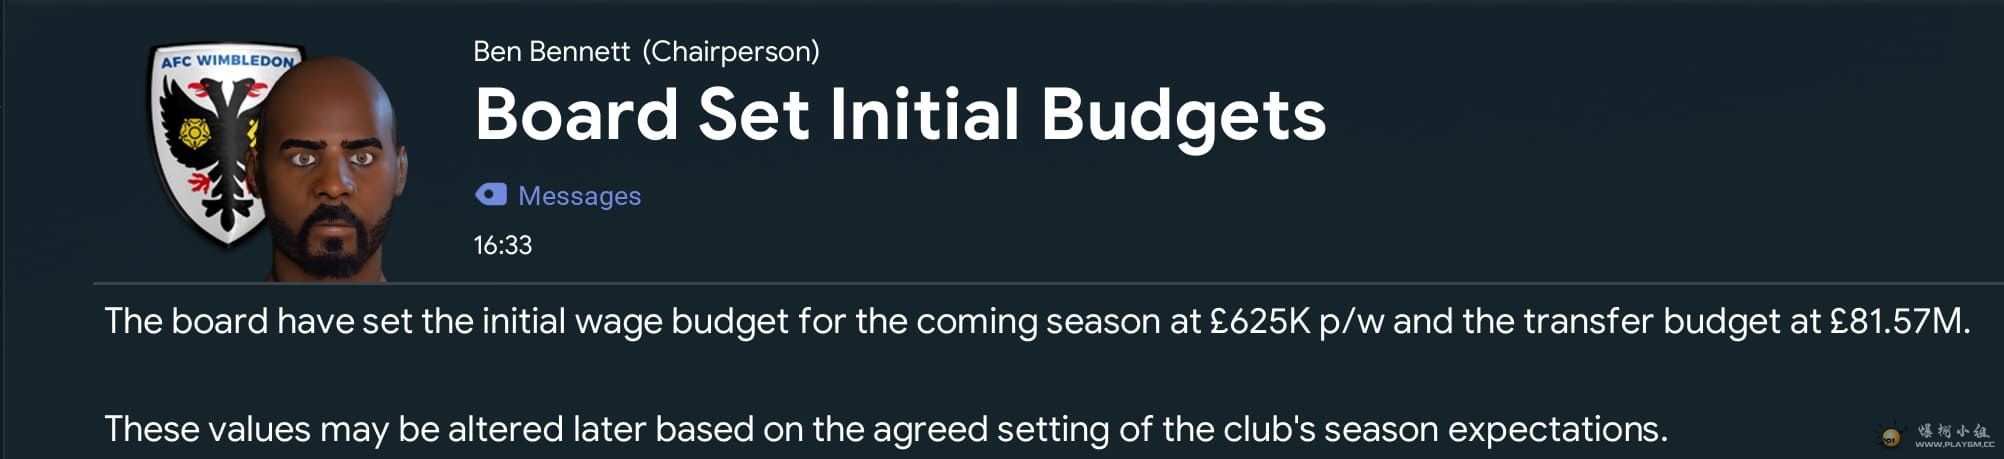 Initial Budget.jpg